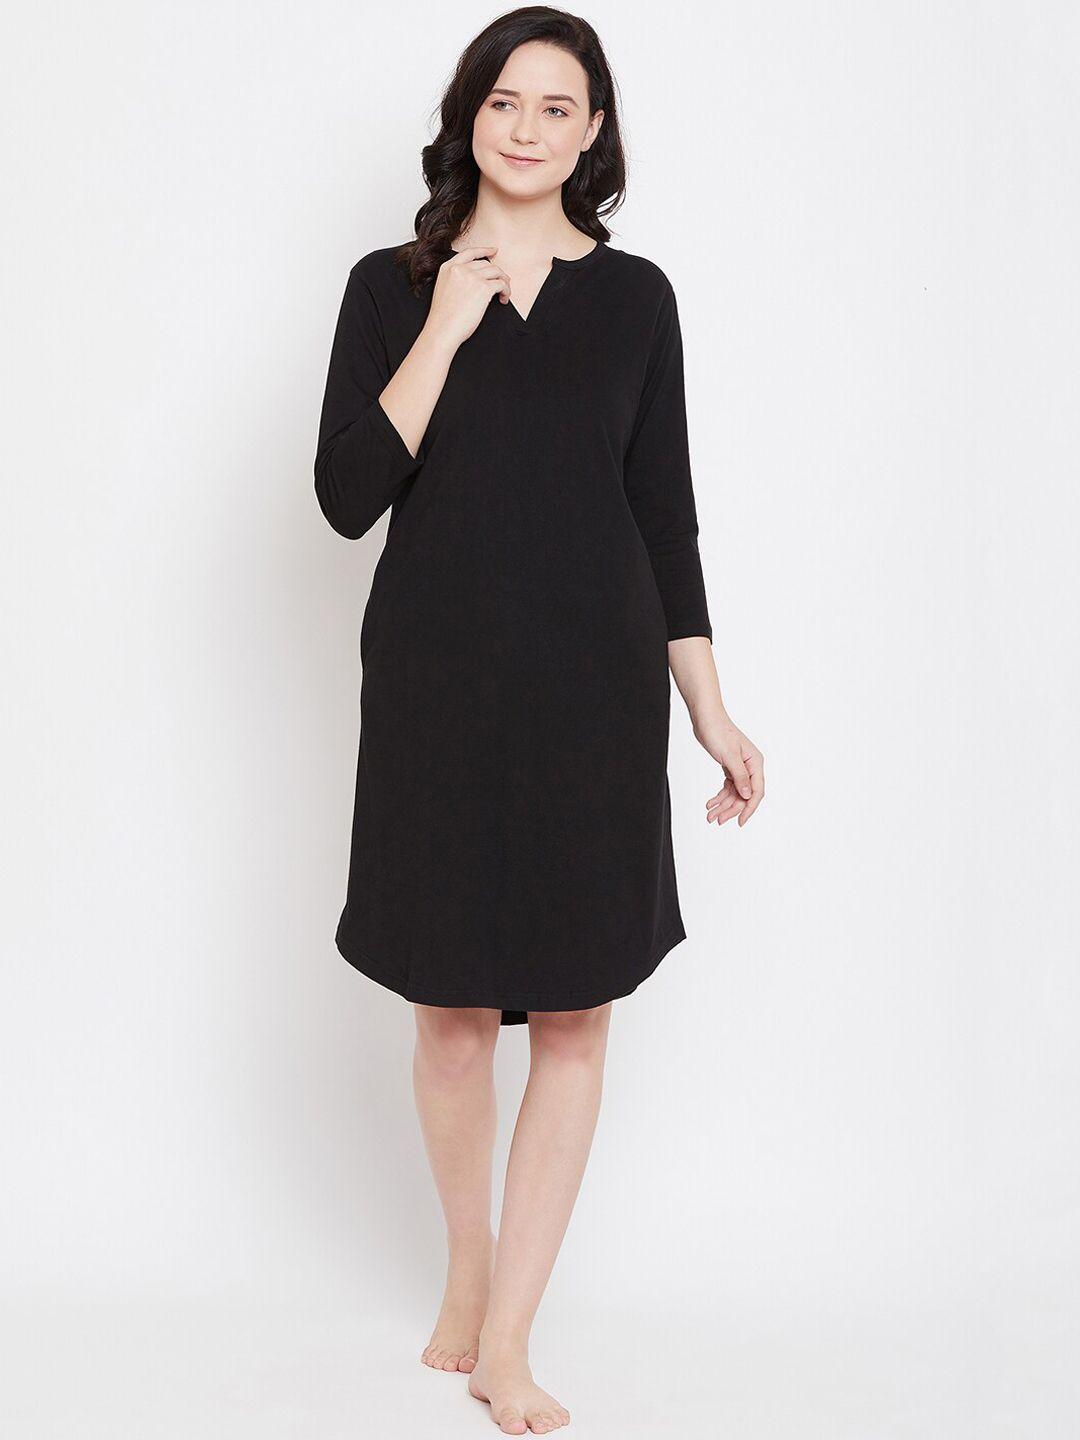 hypernation-women-black-solid-knee-length-knitted-nightdress